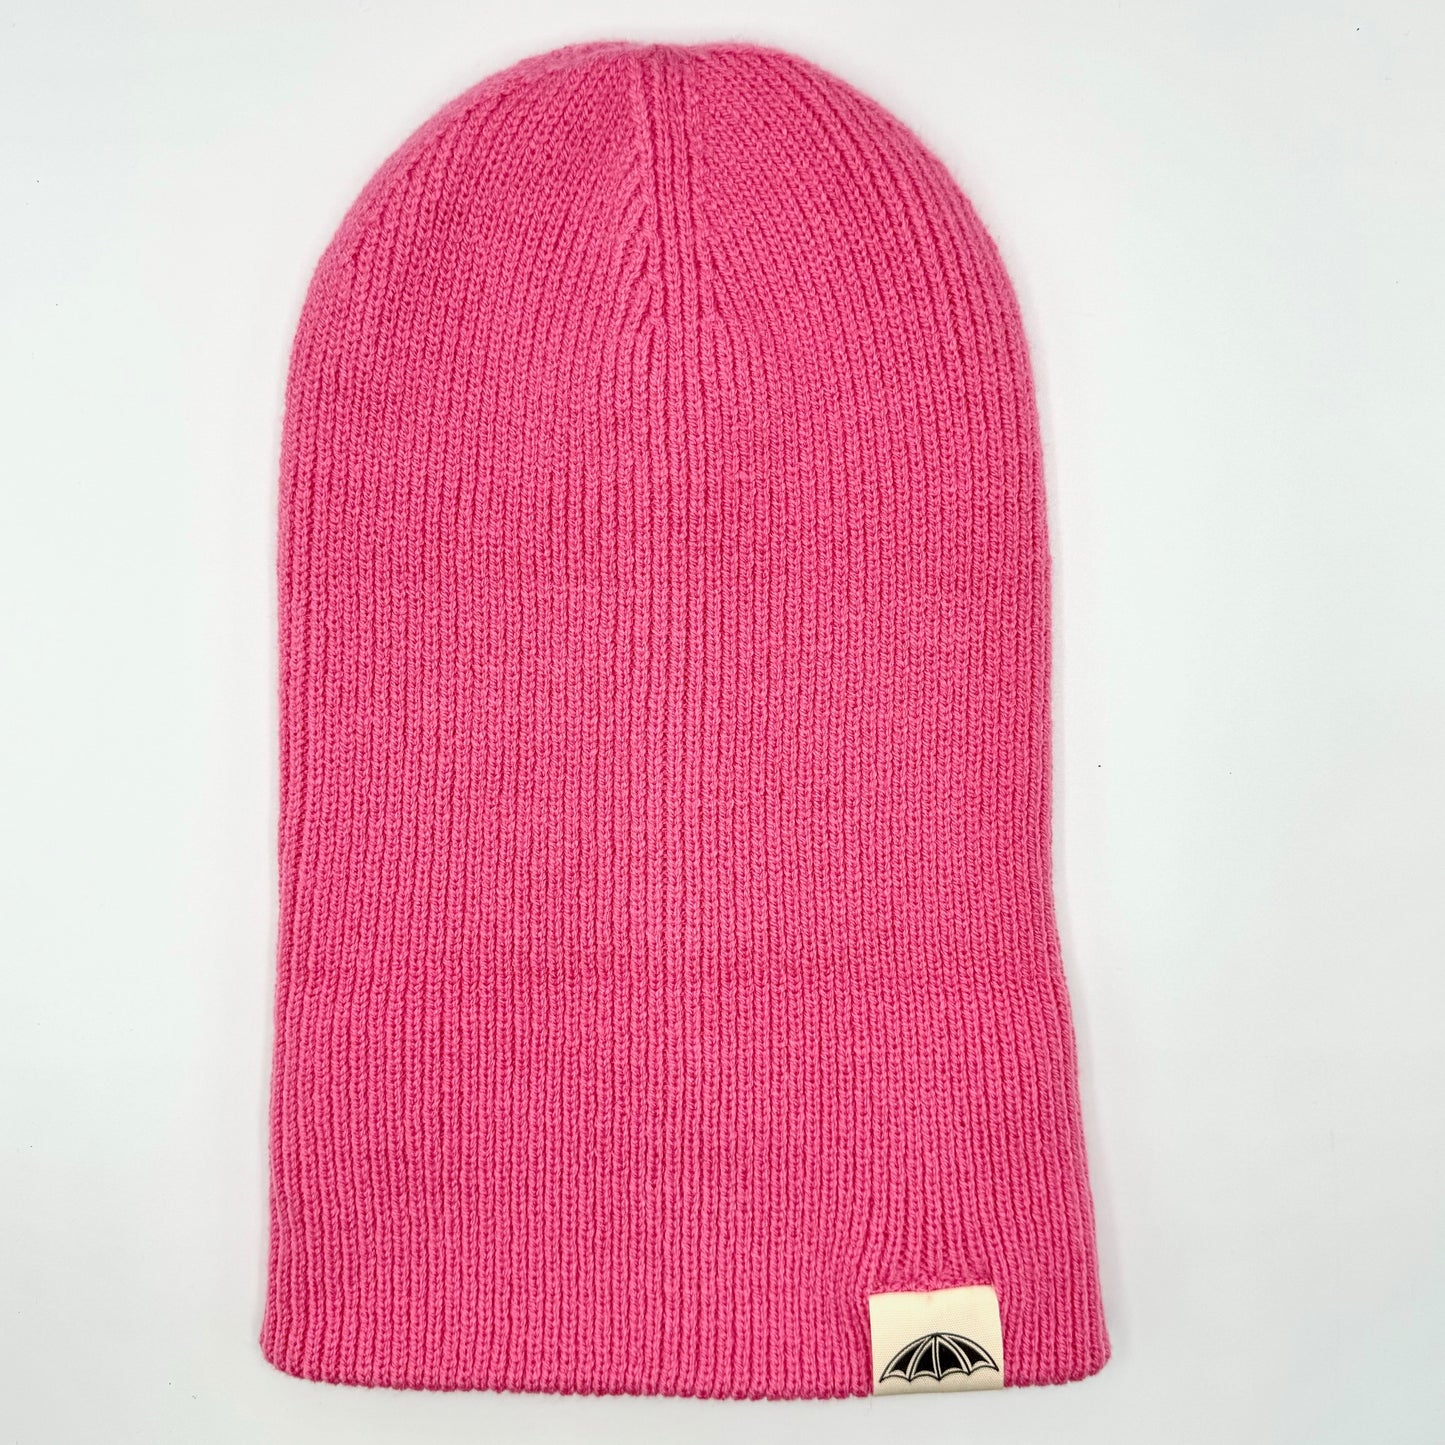 chilly days beanie hat for PANDAS foundation | bubblegum